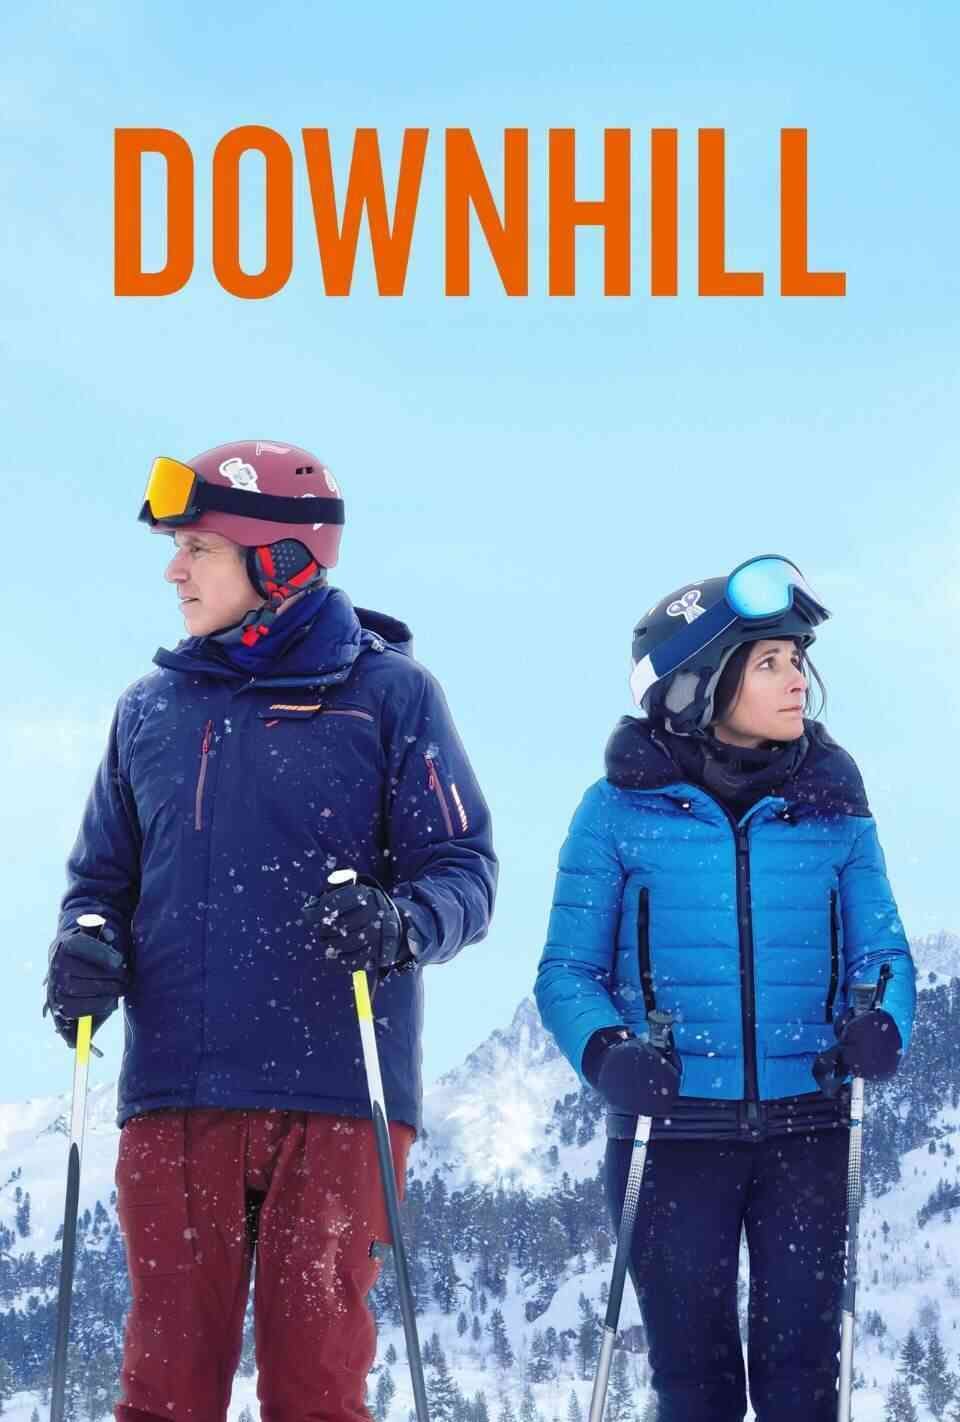 Read Downhill screenplay (poster)